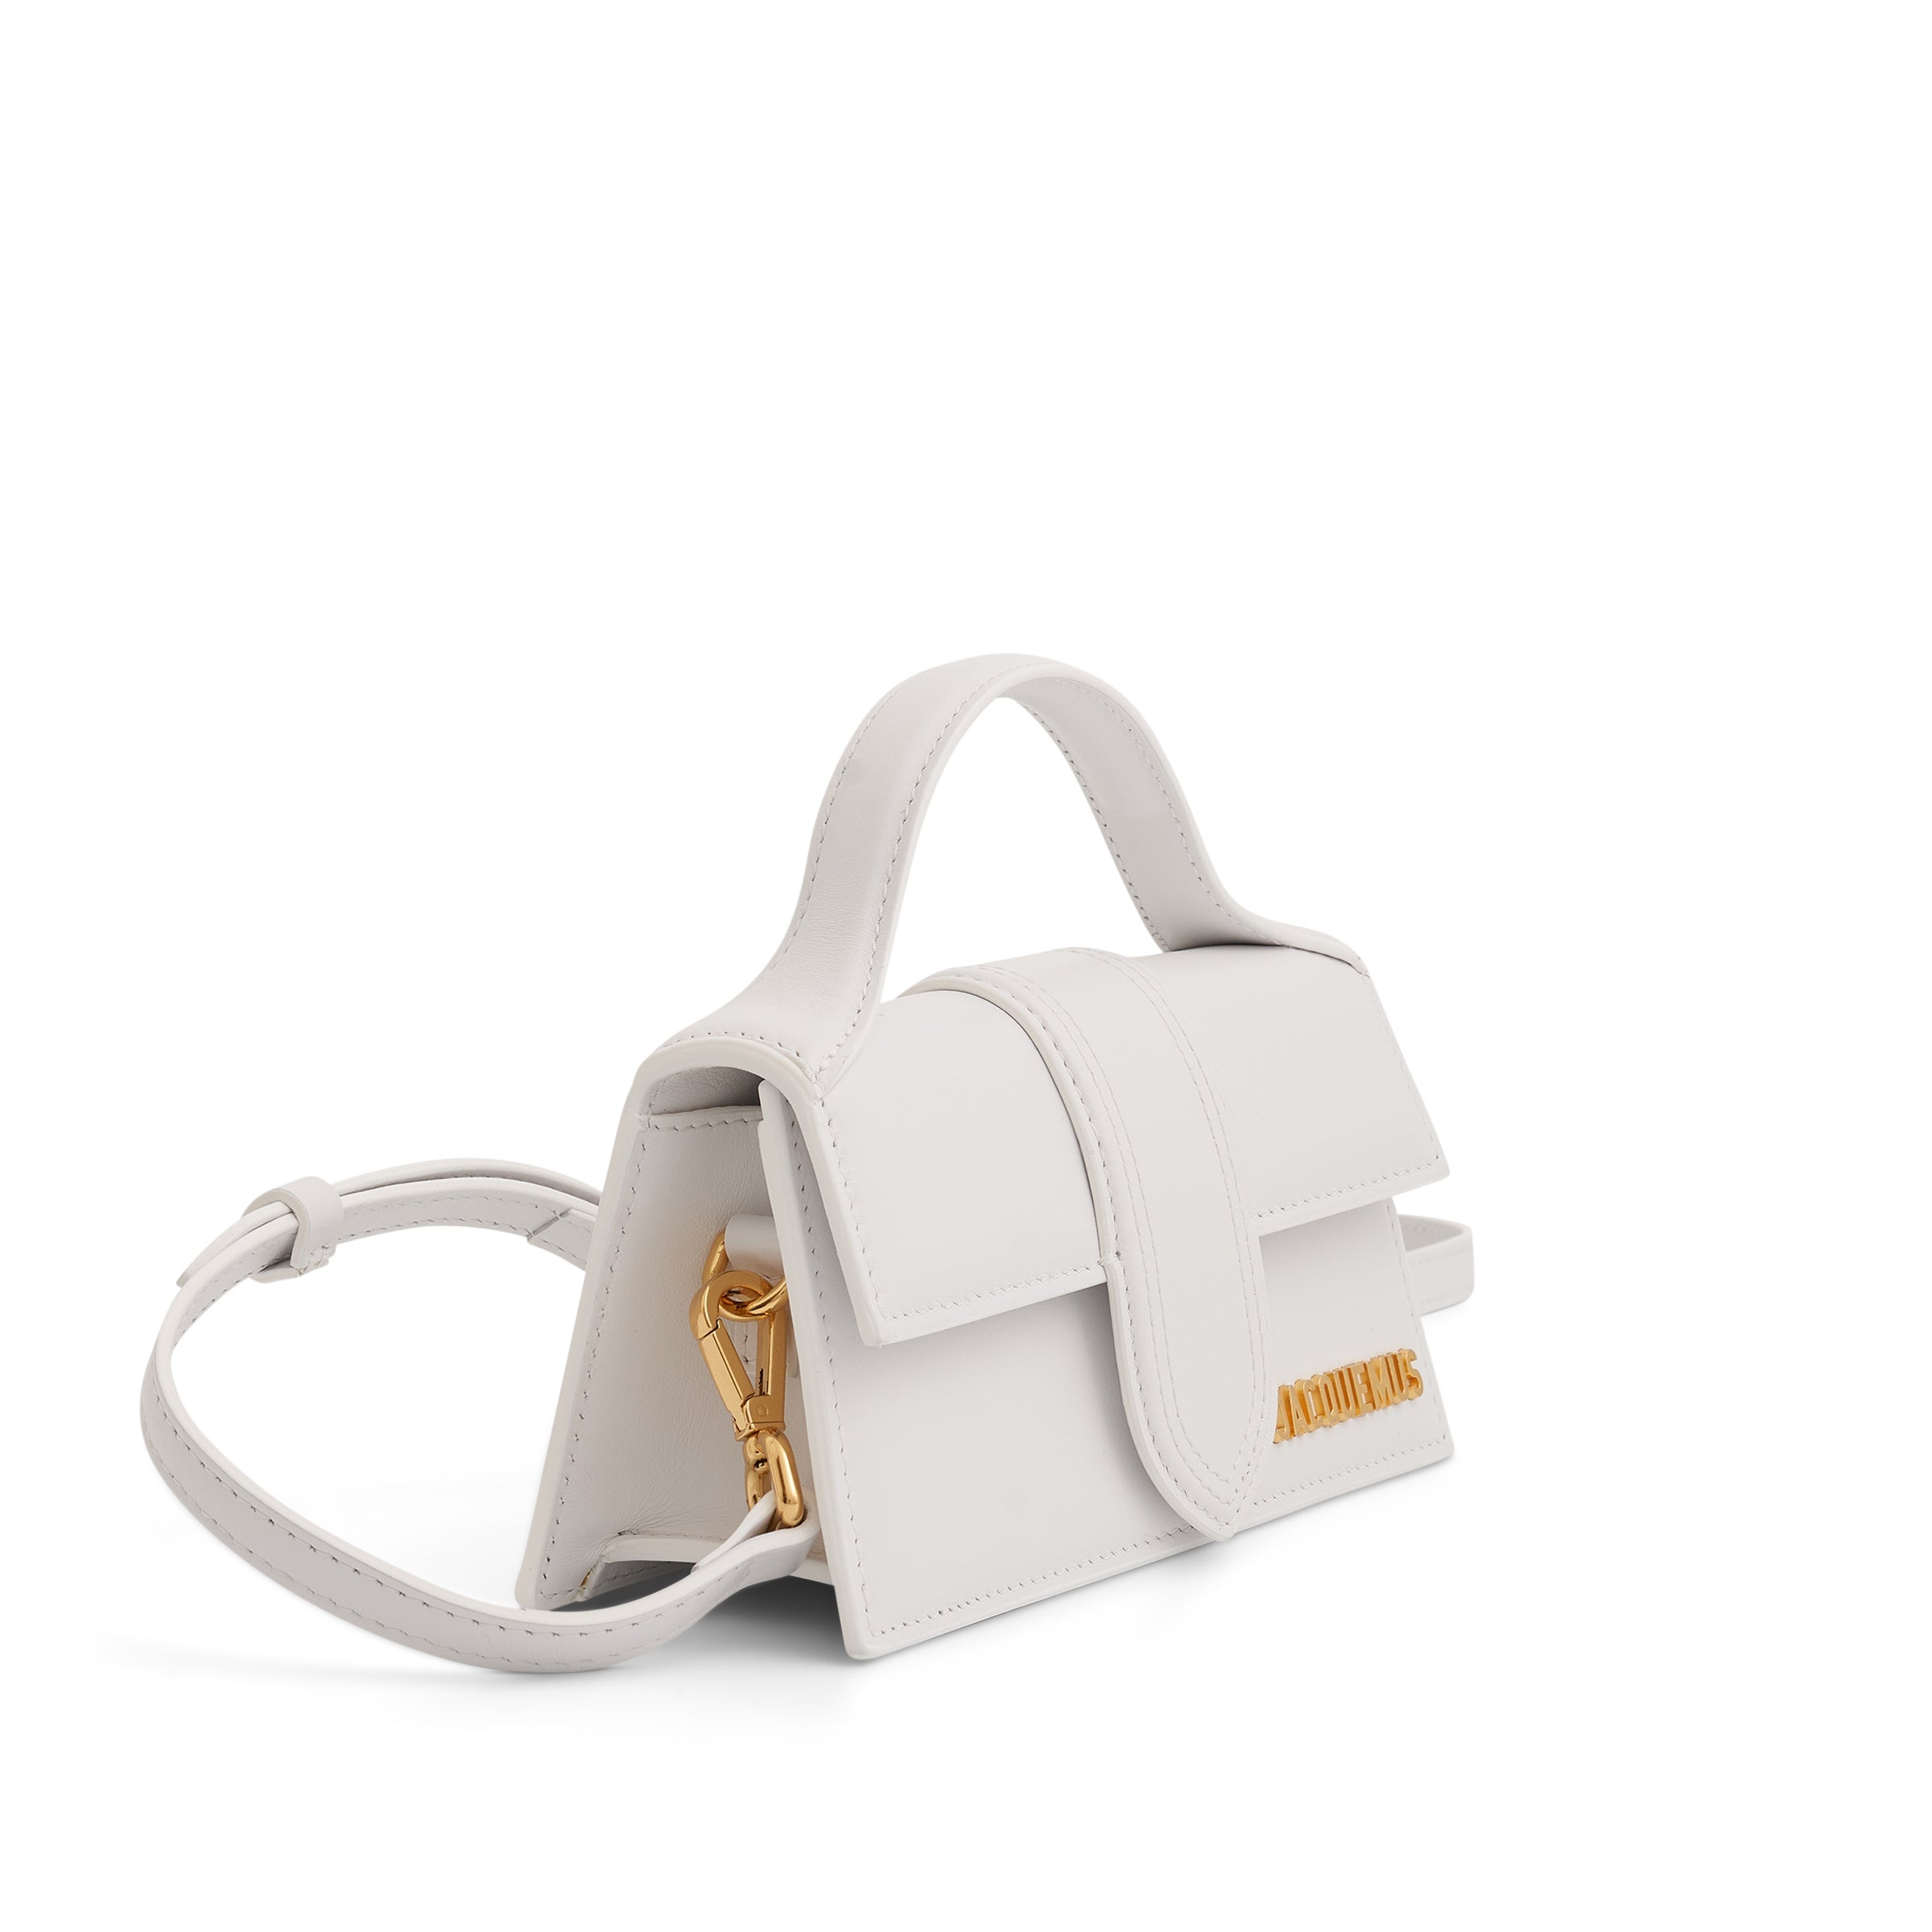 Le Bambino Mini Leather Bag in White - 2